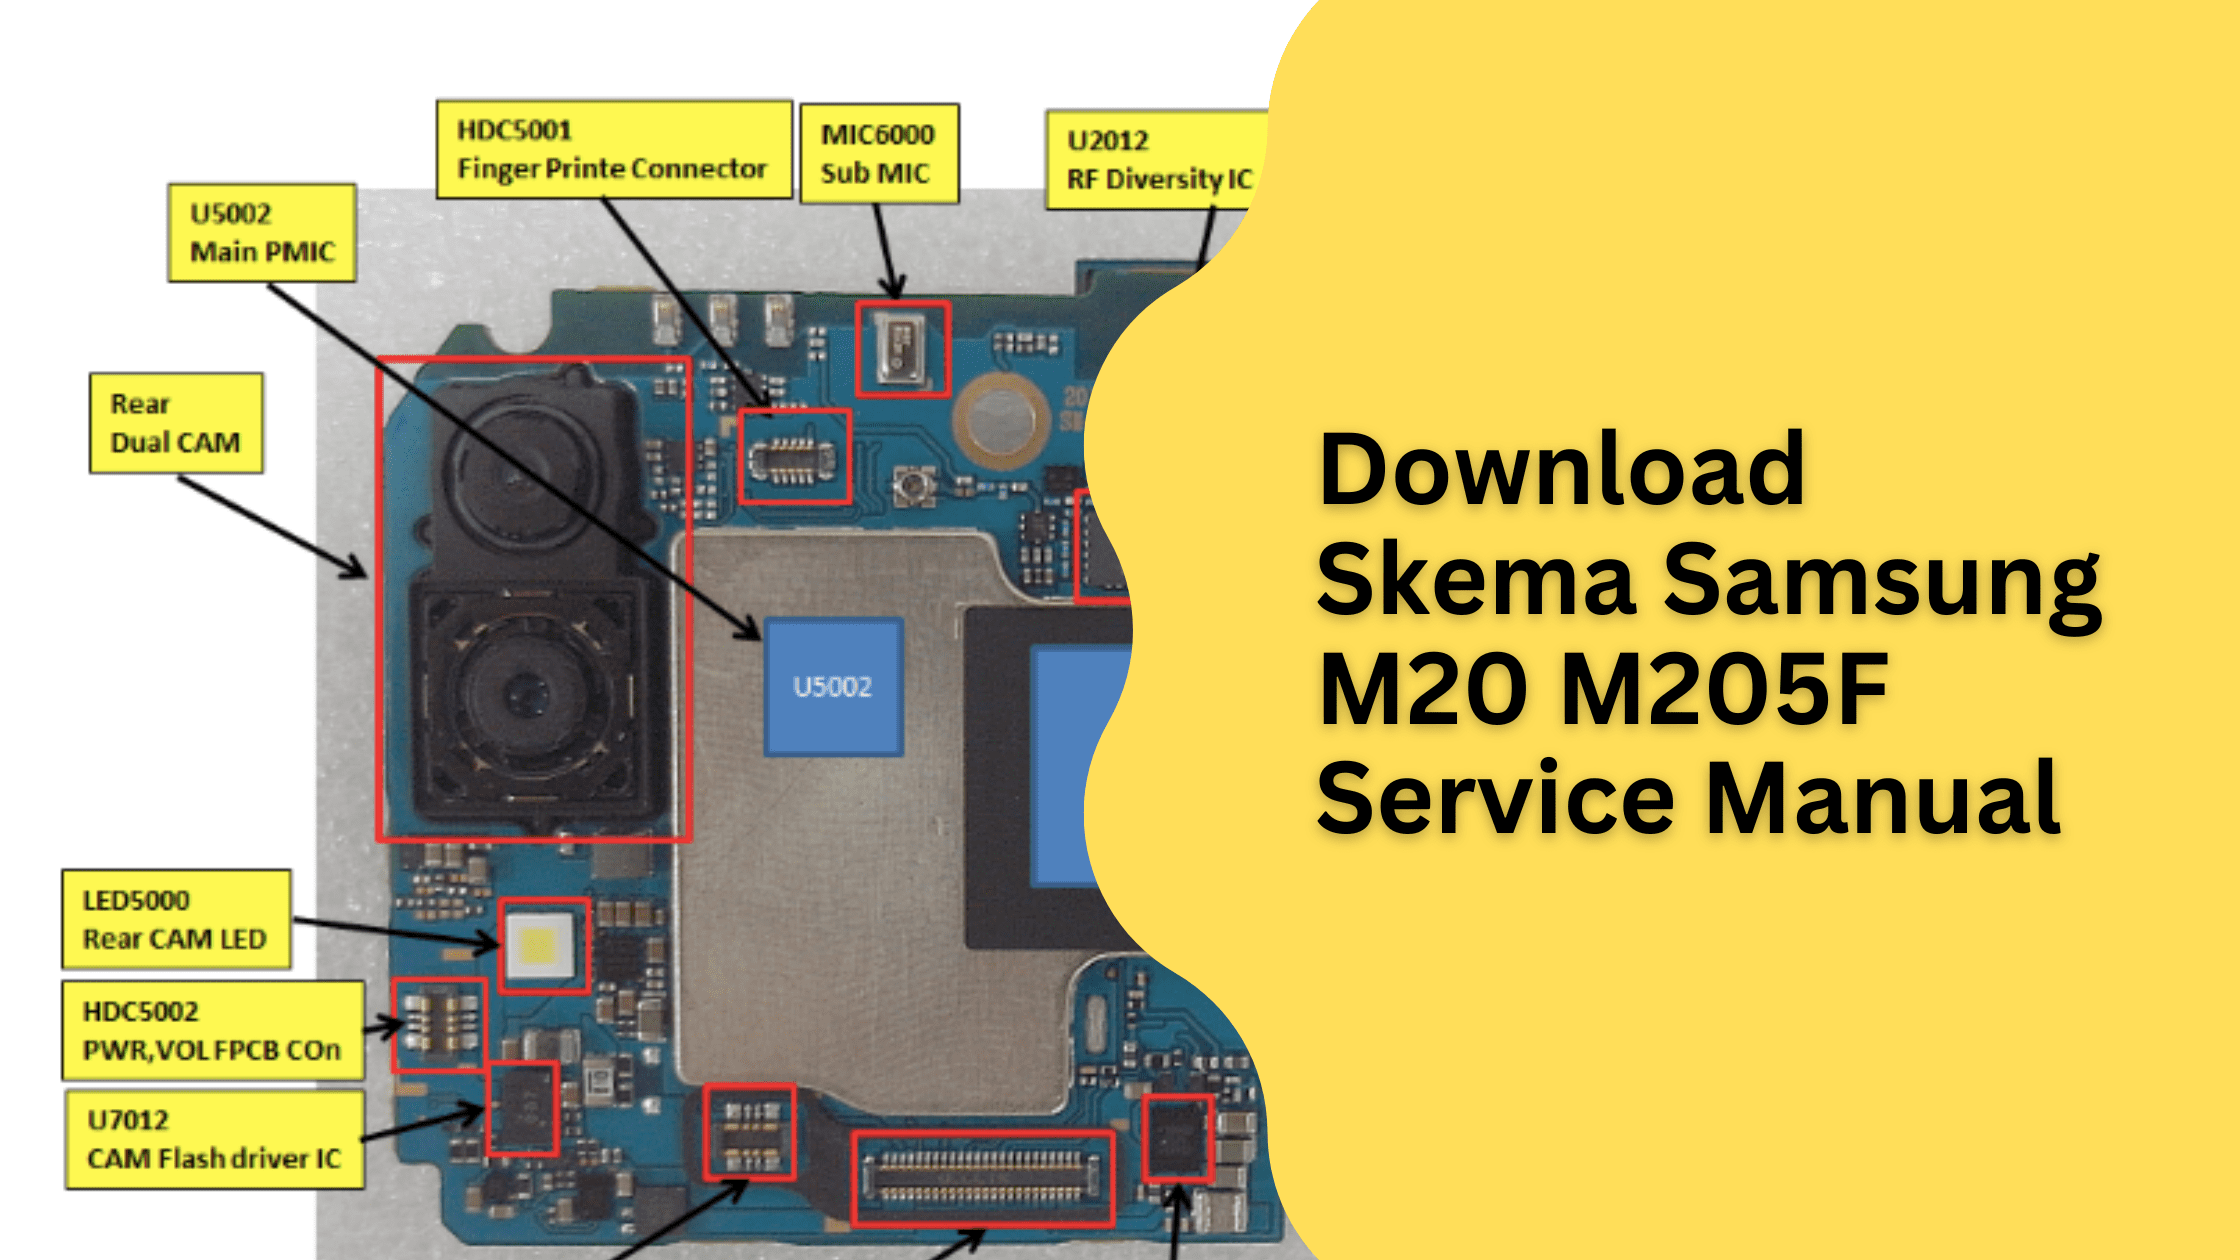 Download Skema Samsung M20 M205F Service Manual